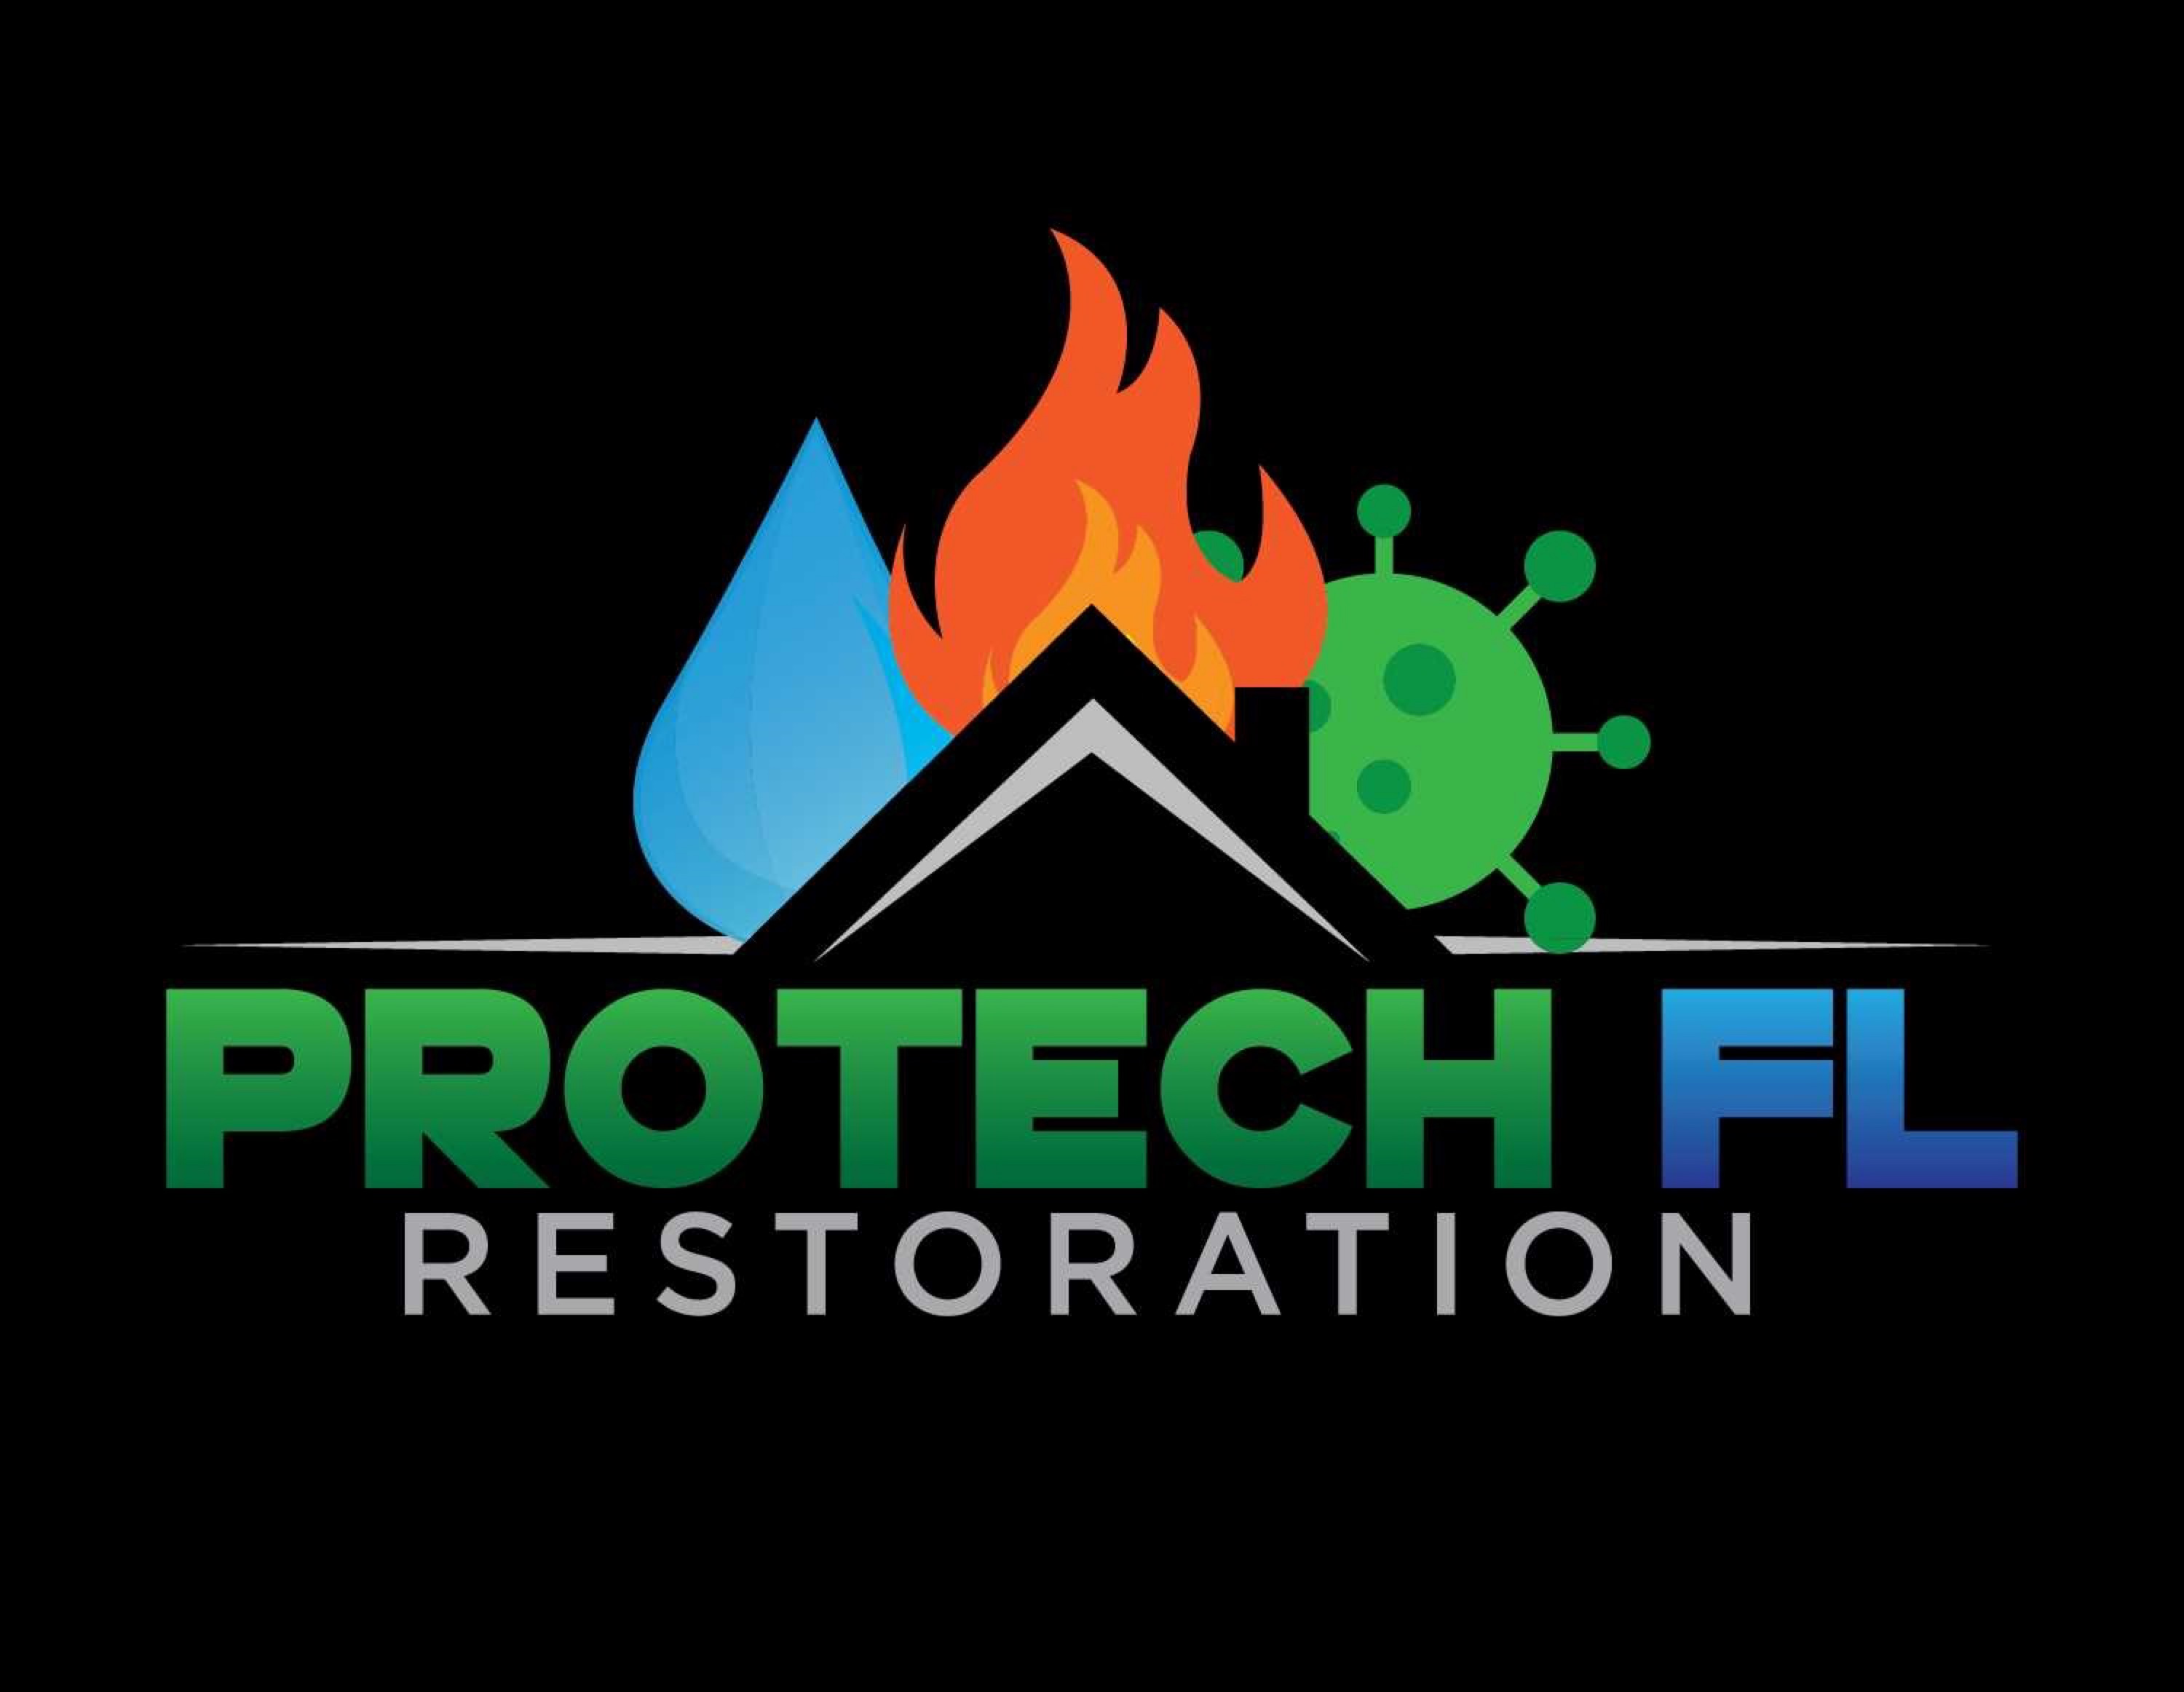 Pro-Tech FL Restoration Logo